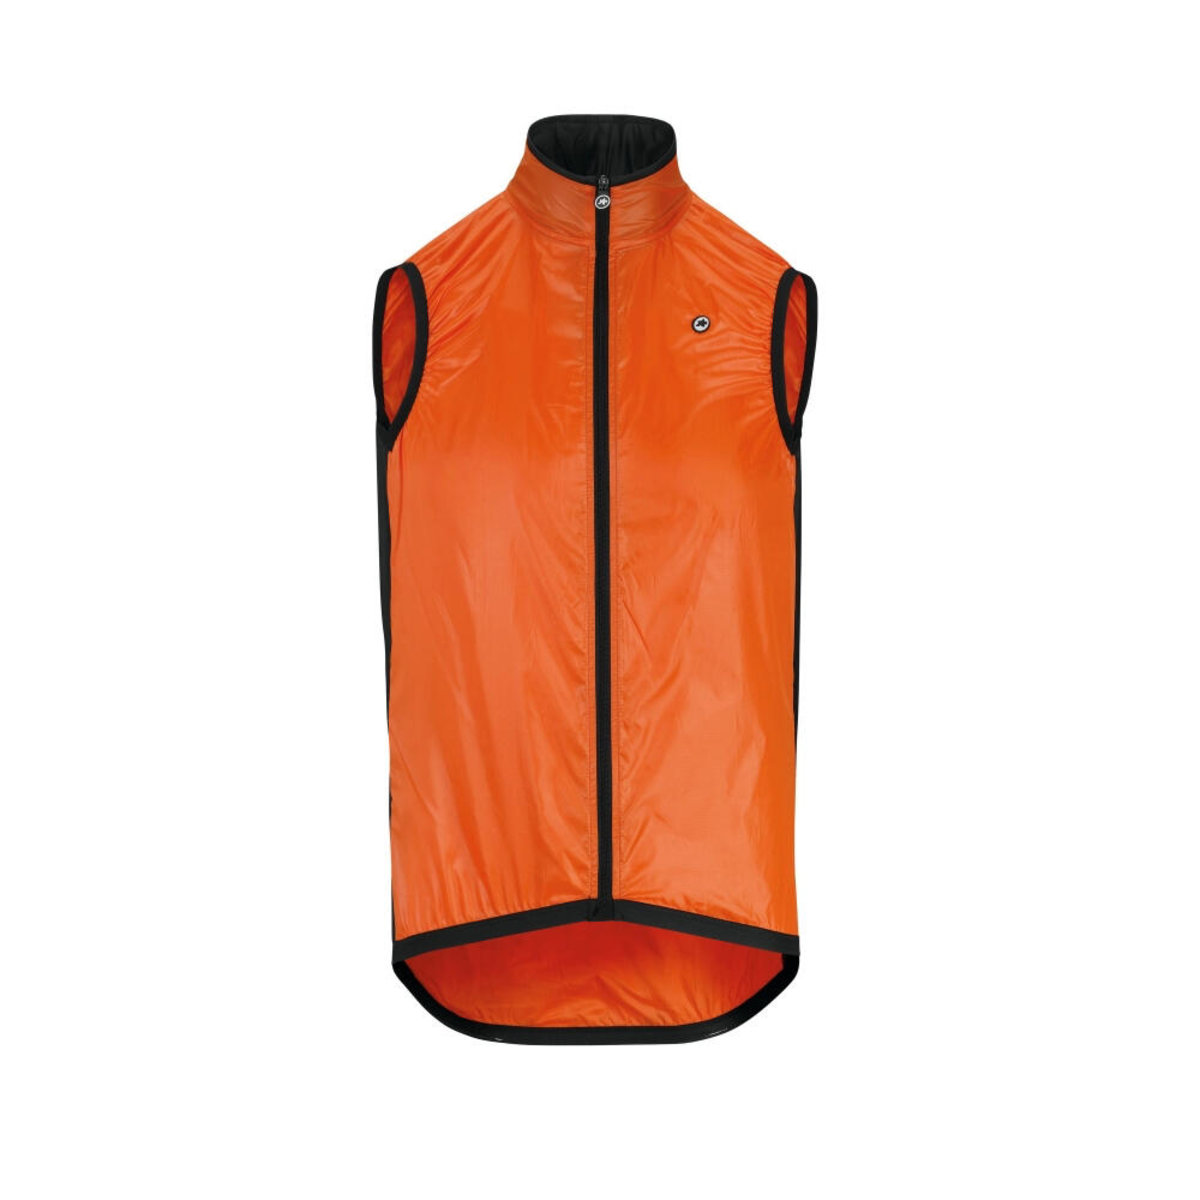 Жилетка ASSOS Mille GT Wind Vest Lolly Red, мужская, оранжевая, XL фото 1